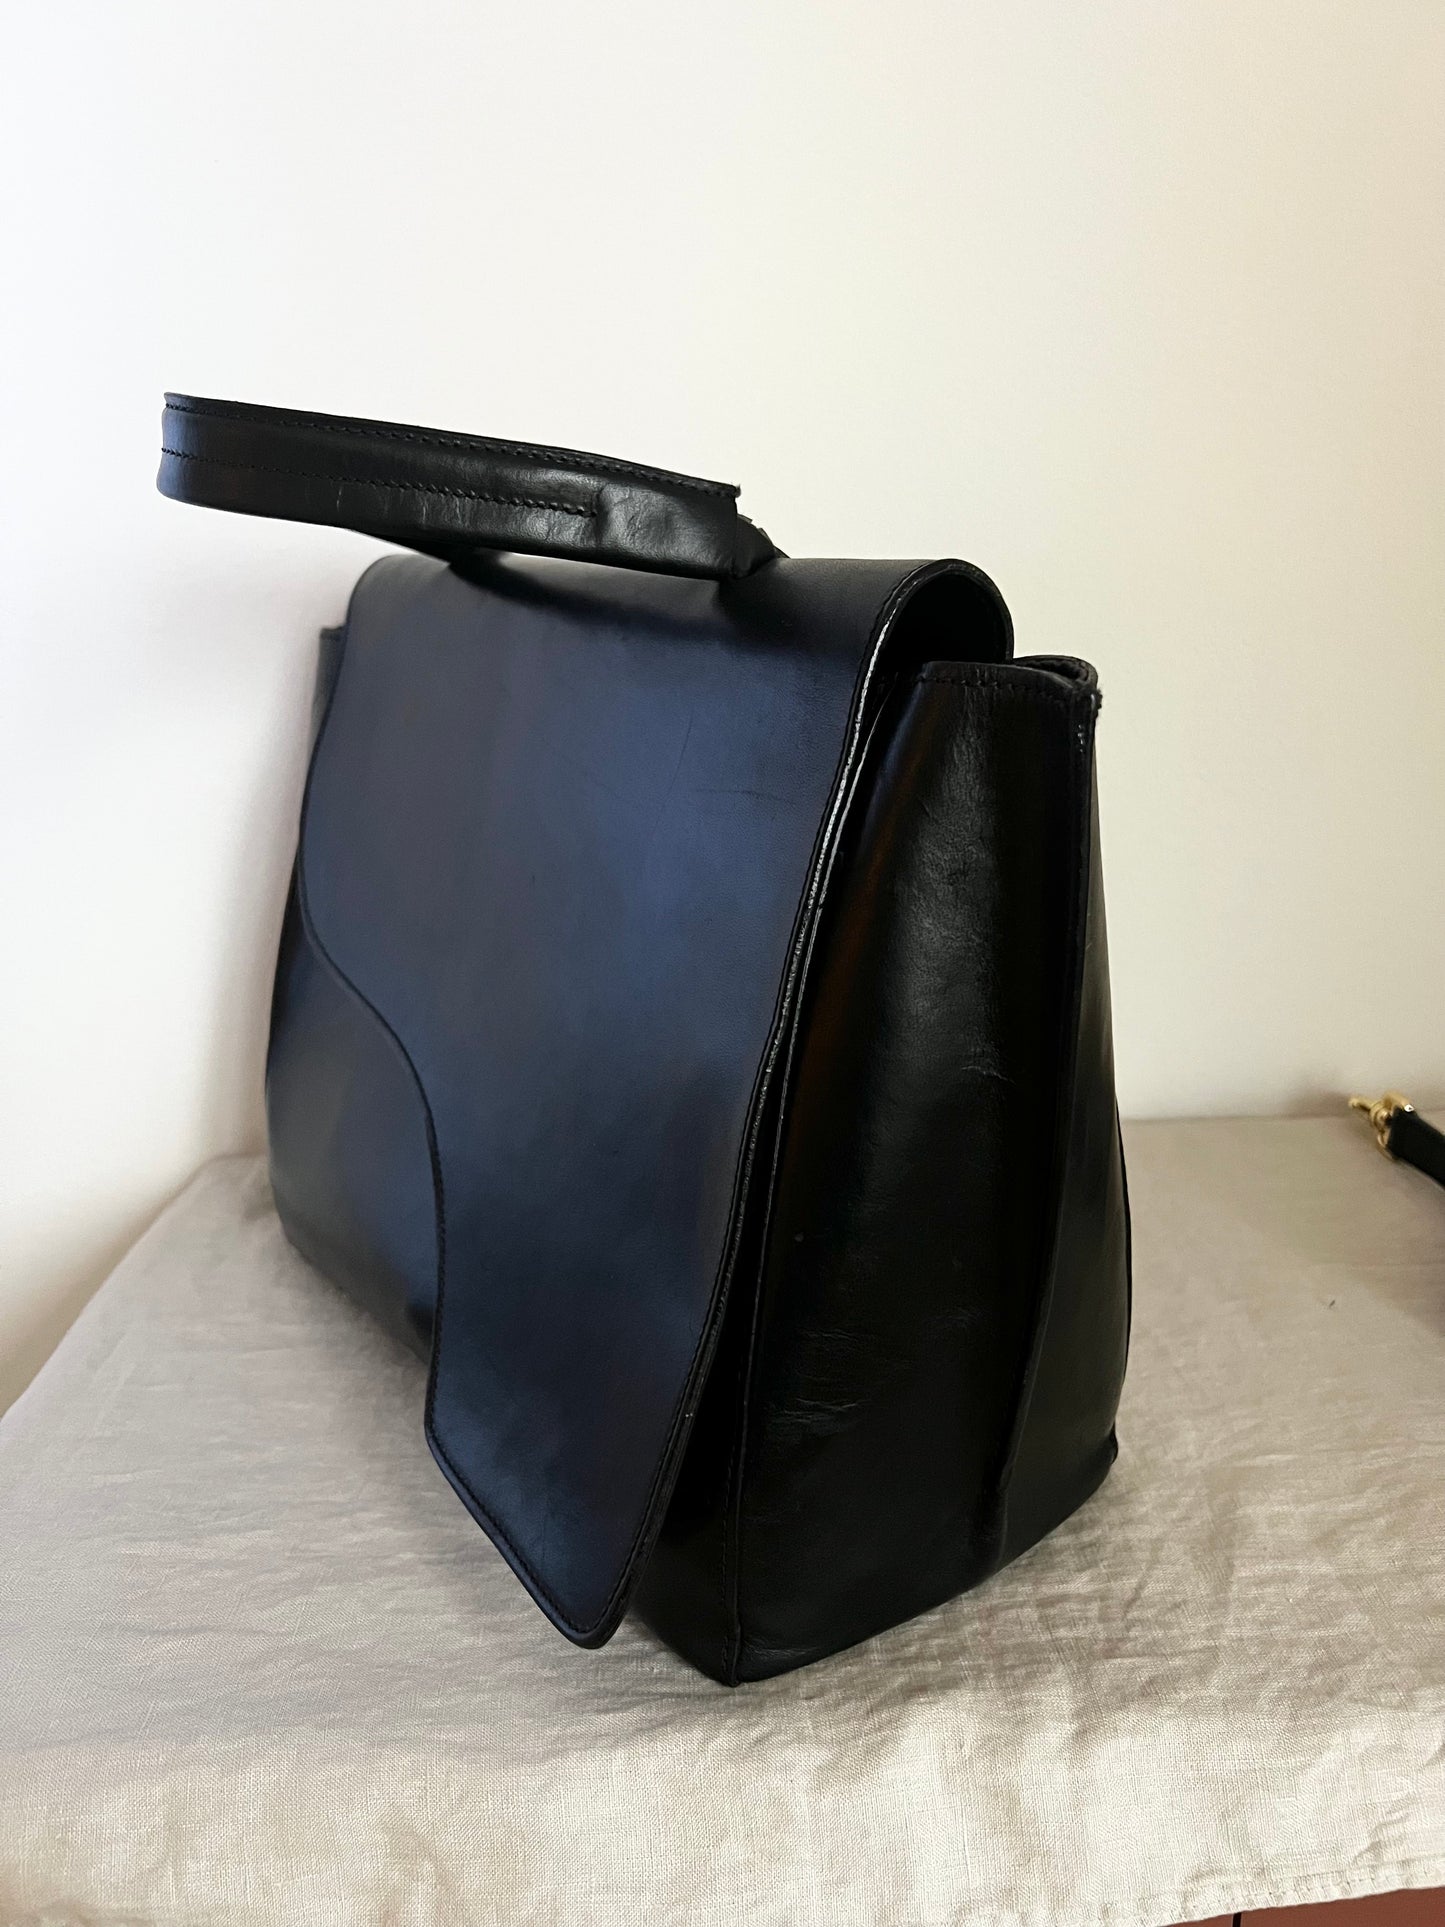 ATP Atelier Volterra Black Leather Large Handbag